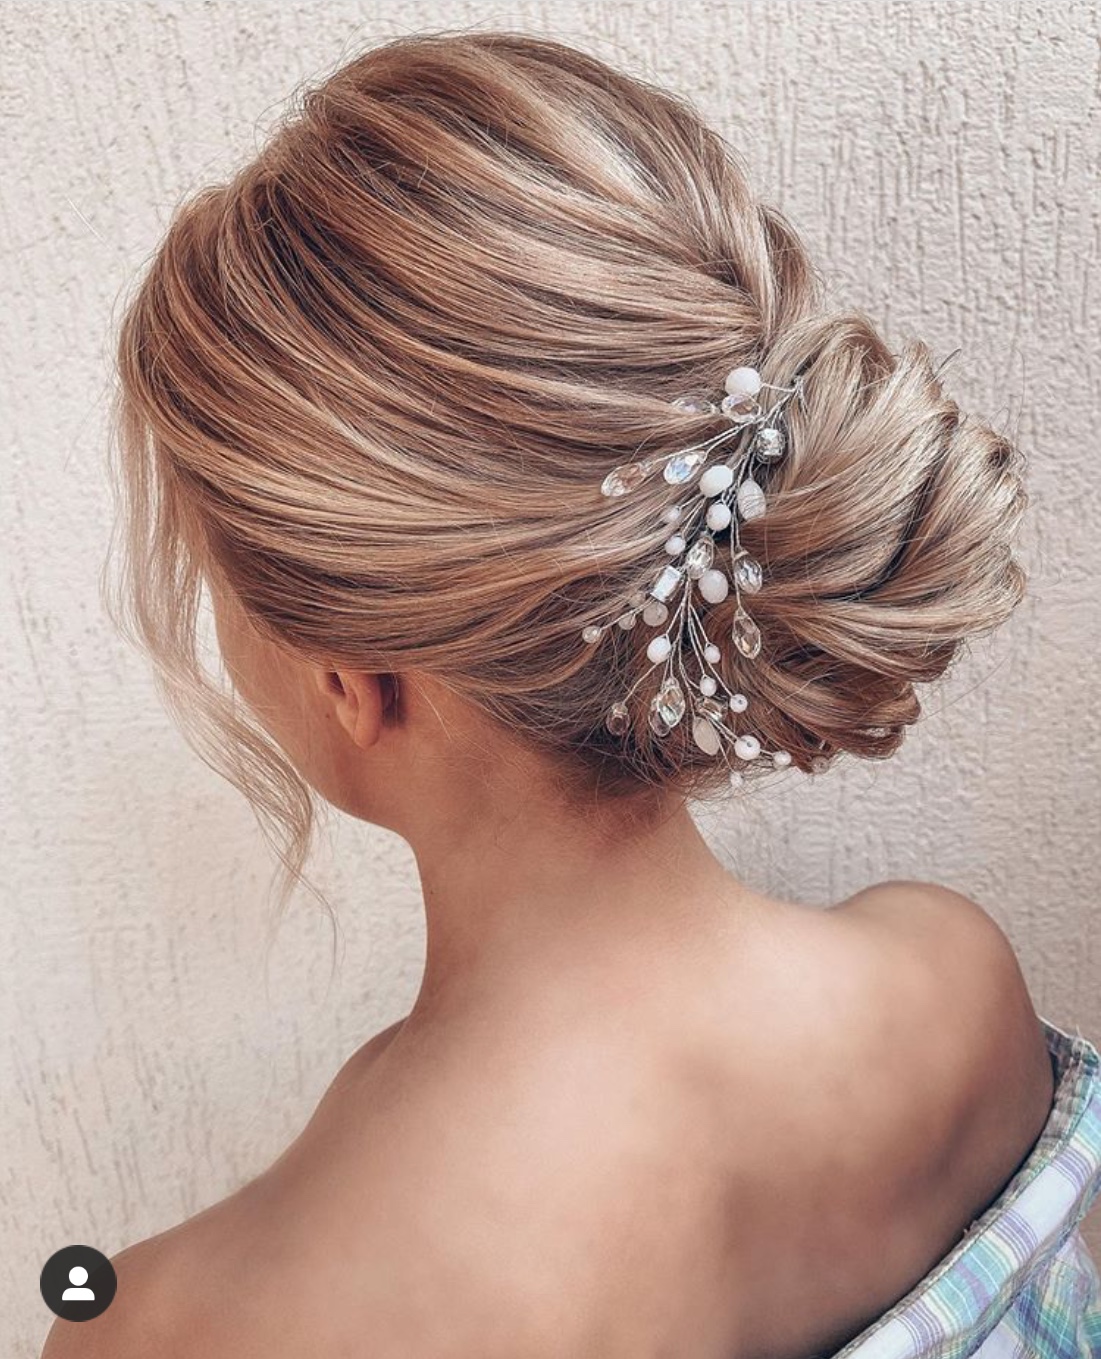 Bun hairstyles for brides